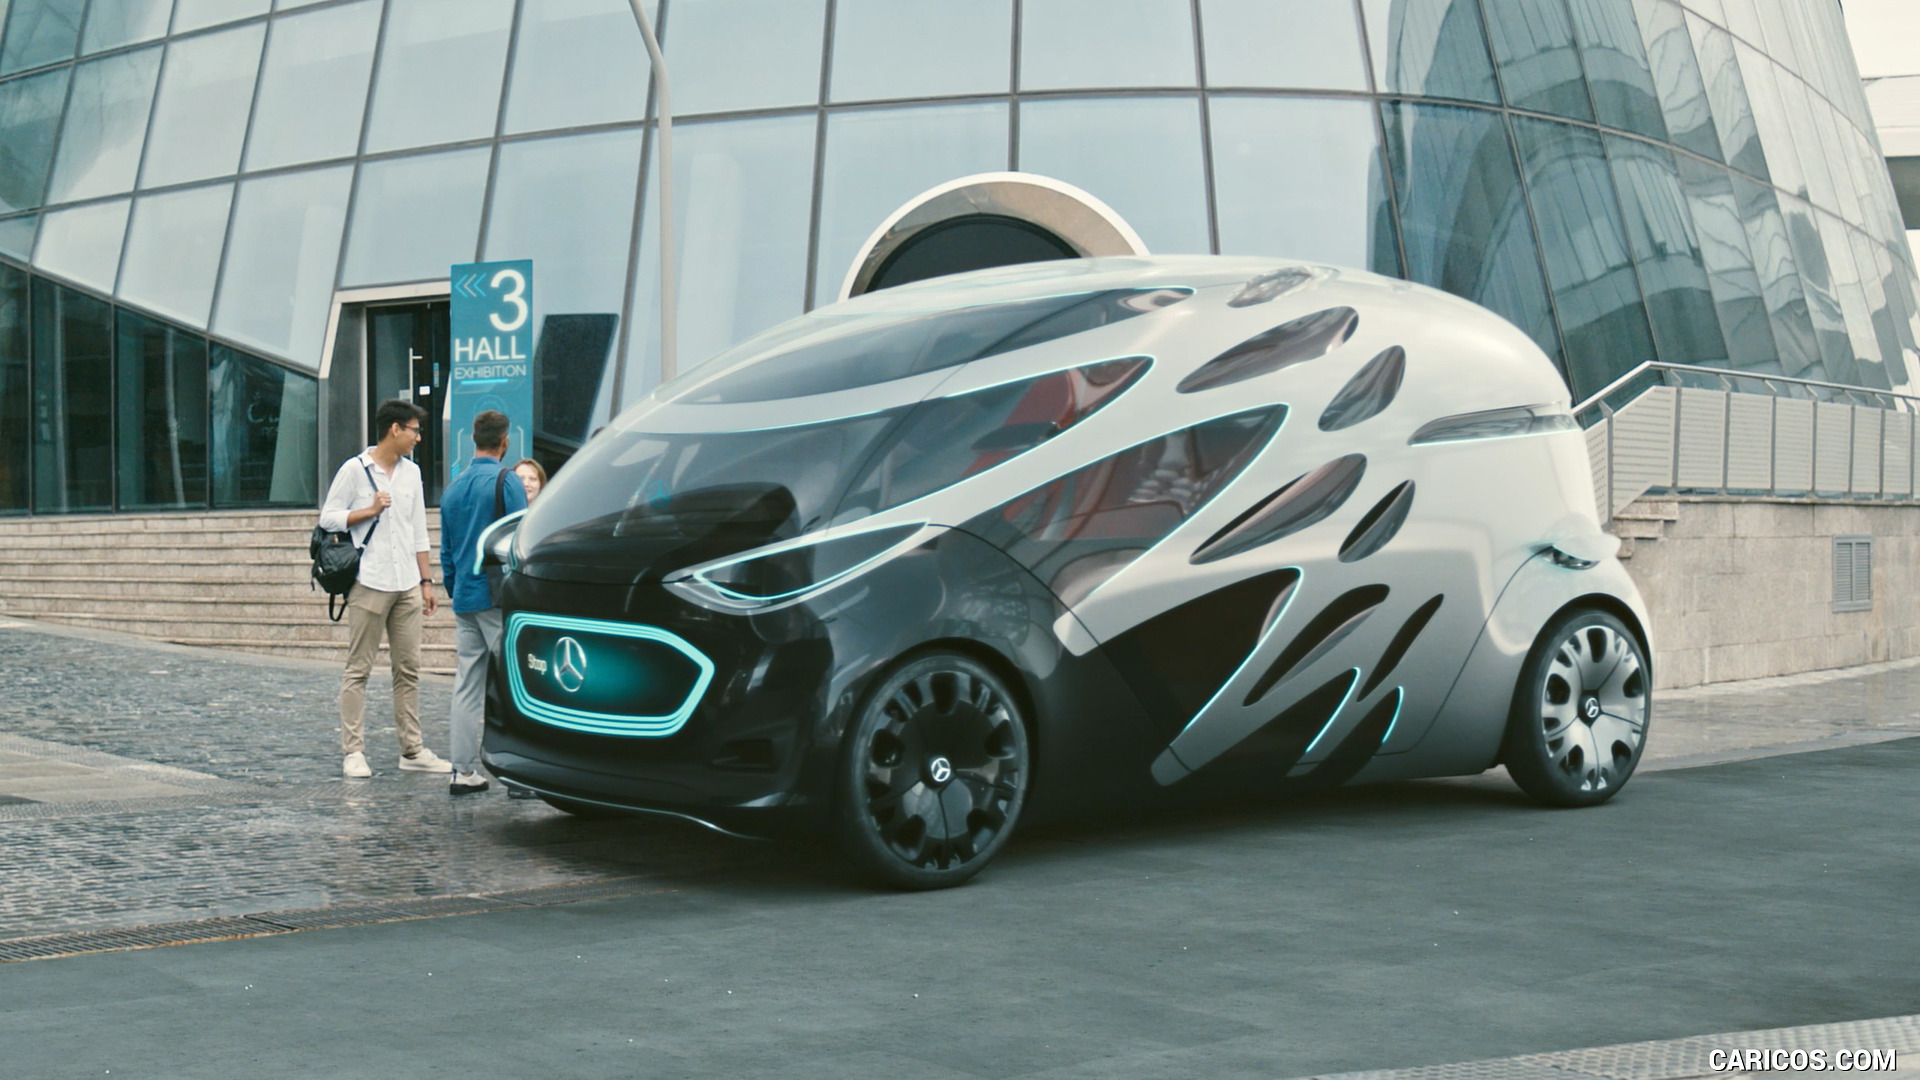 2018 Mercedes-Benz Vision URBANETIC Concept